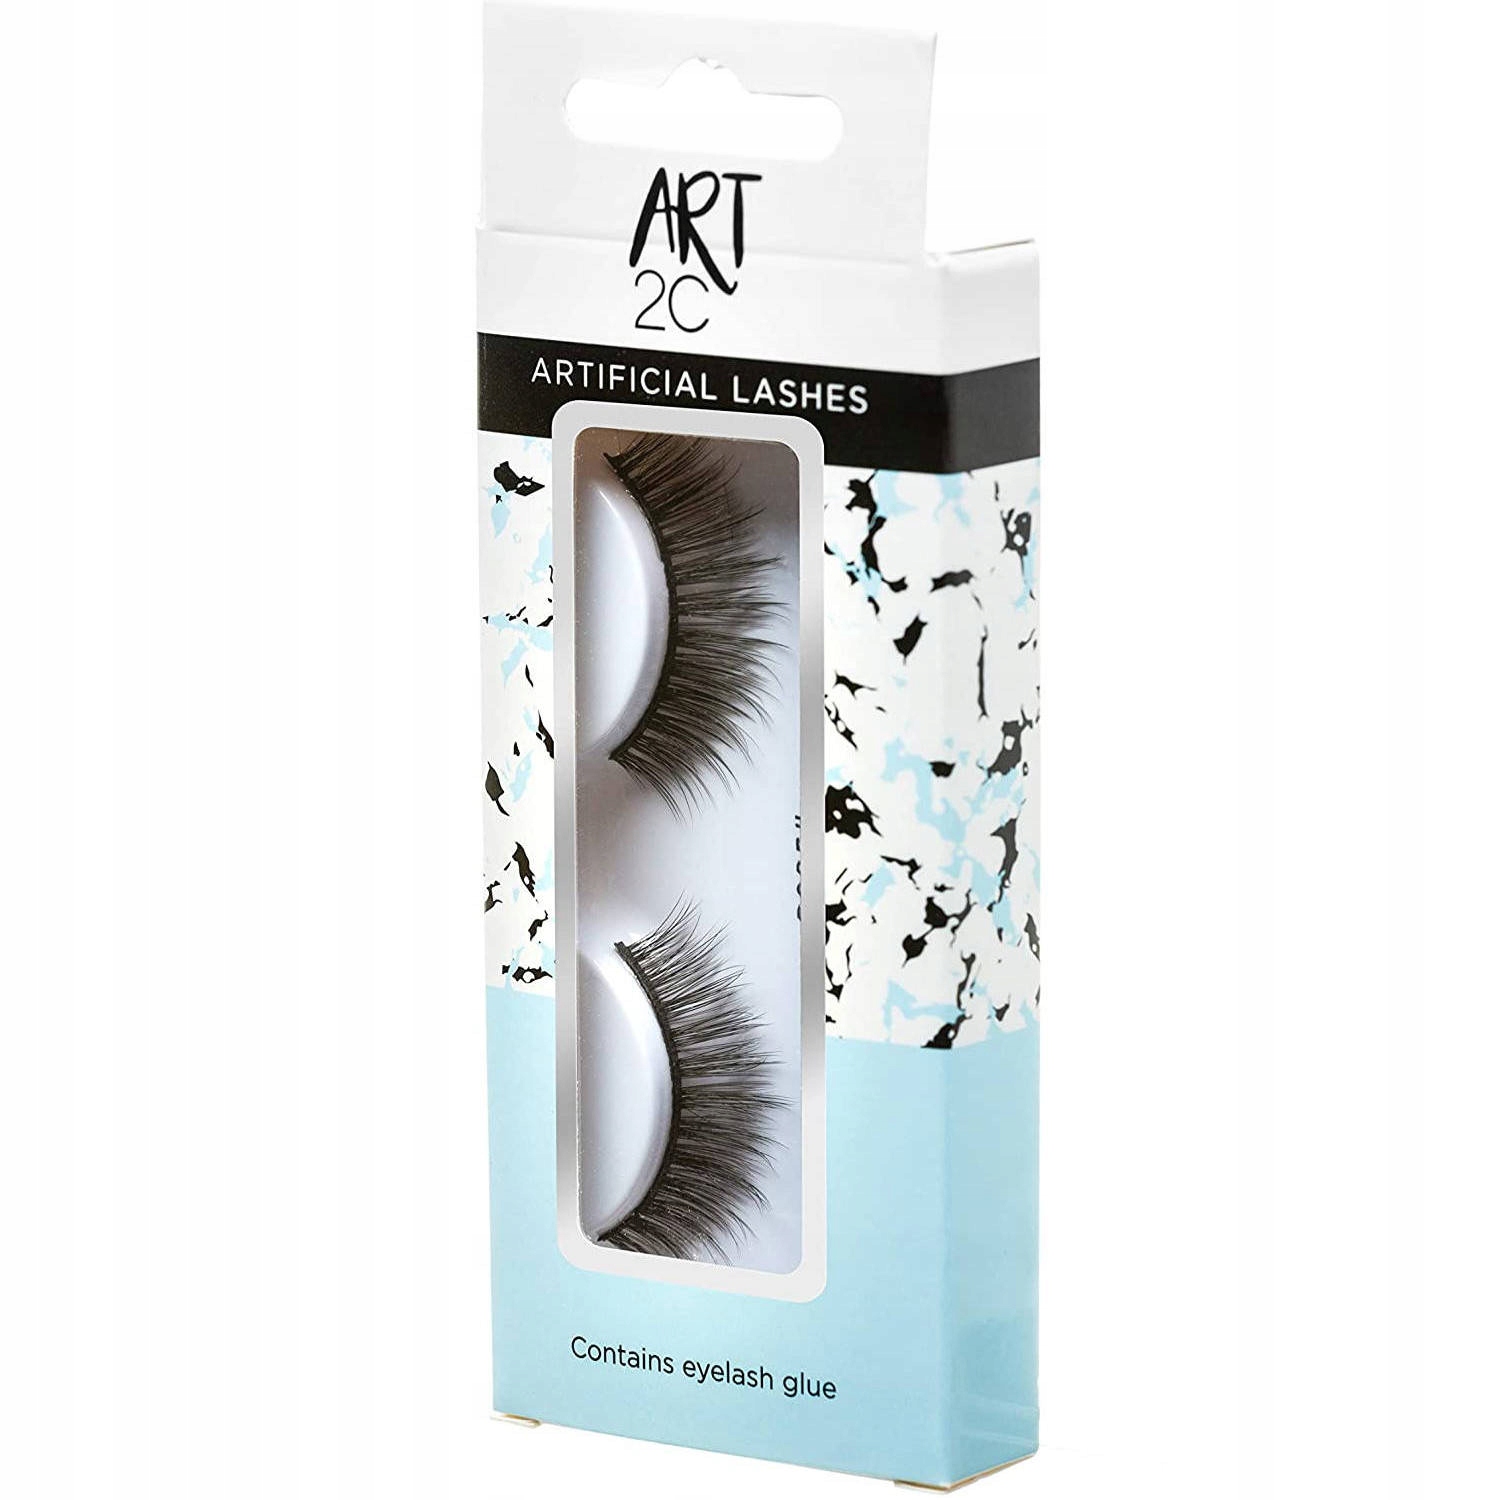 Art 2C Artificial Reusable Fake Eyelashes S025 RRP 2.50 CLEARANCE XL 1.99